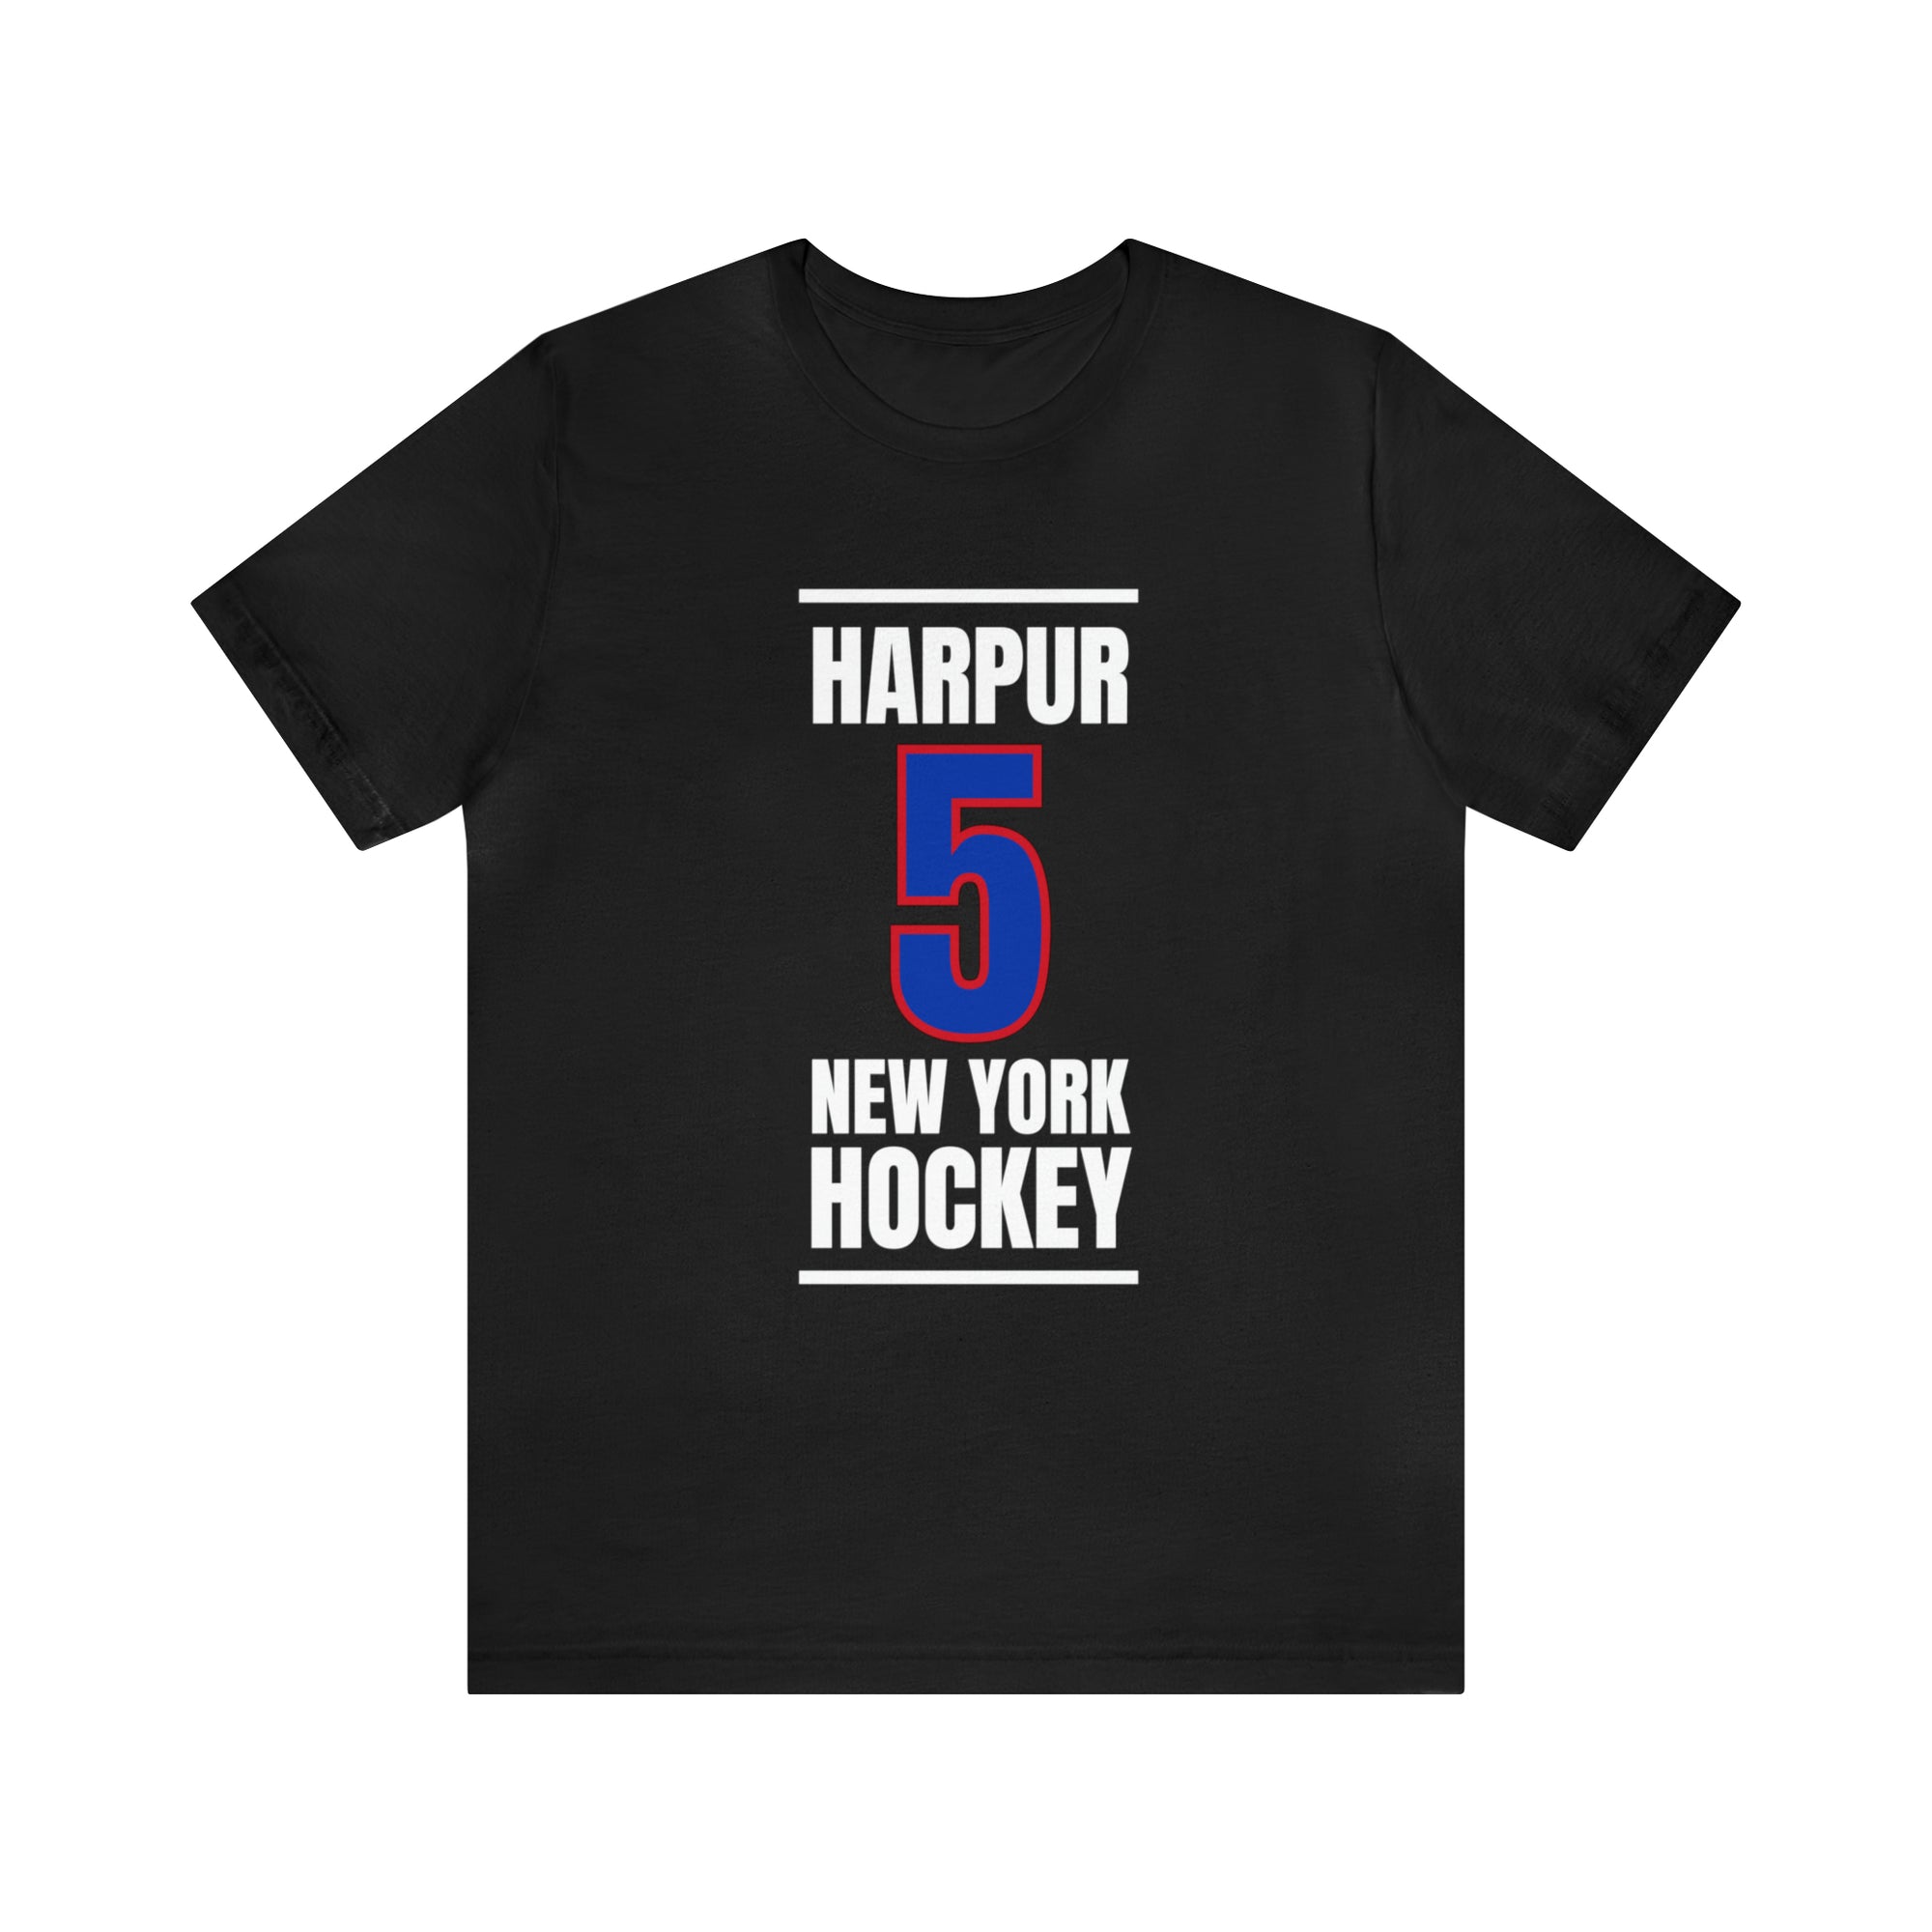 Harpur 5 New York Hockey Royal Blue Vertical Design Unisex T-Shirt